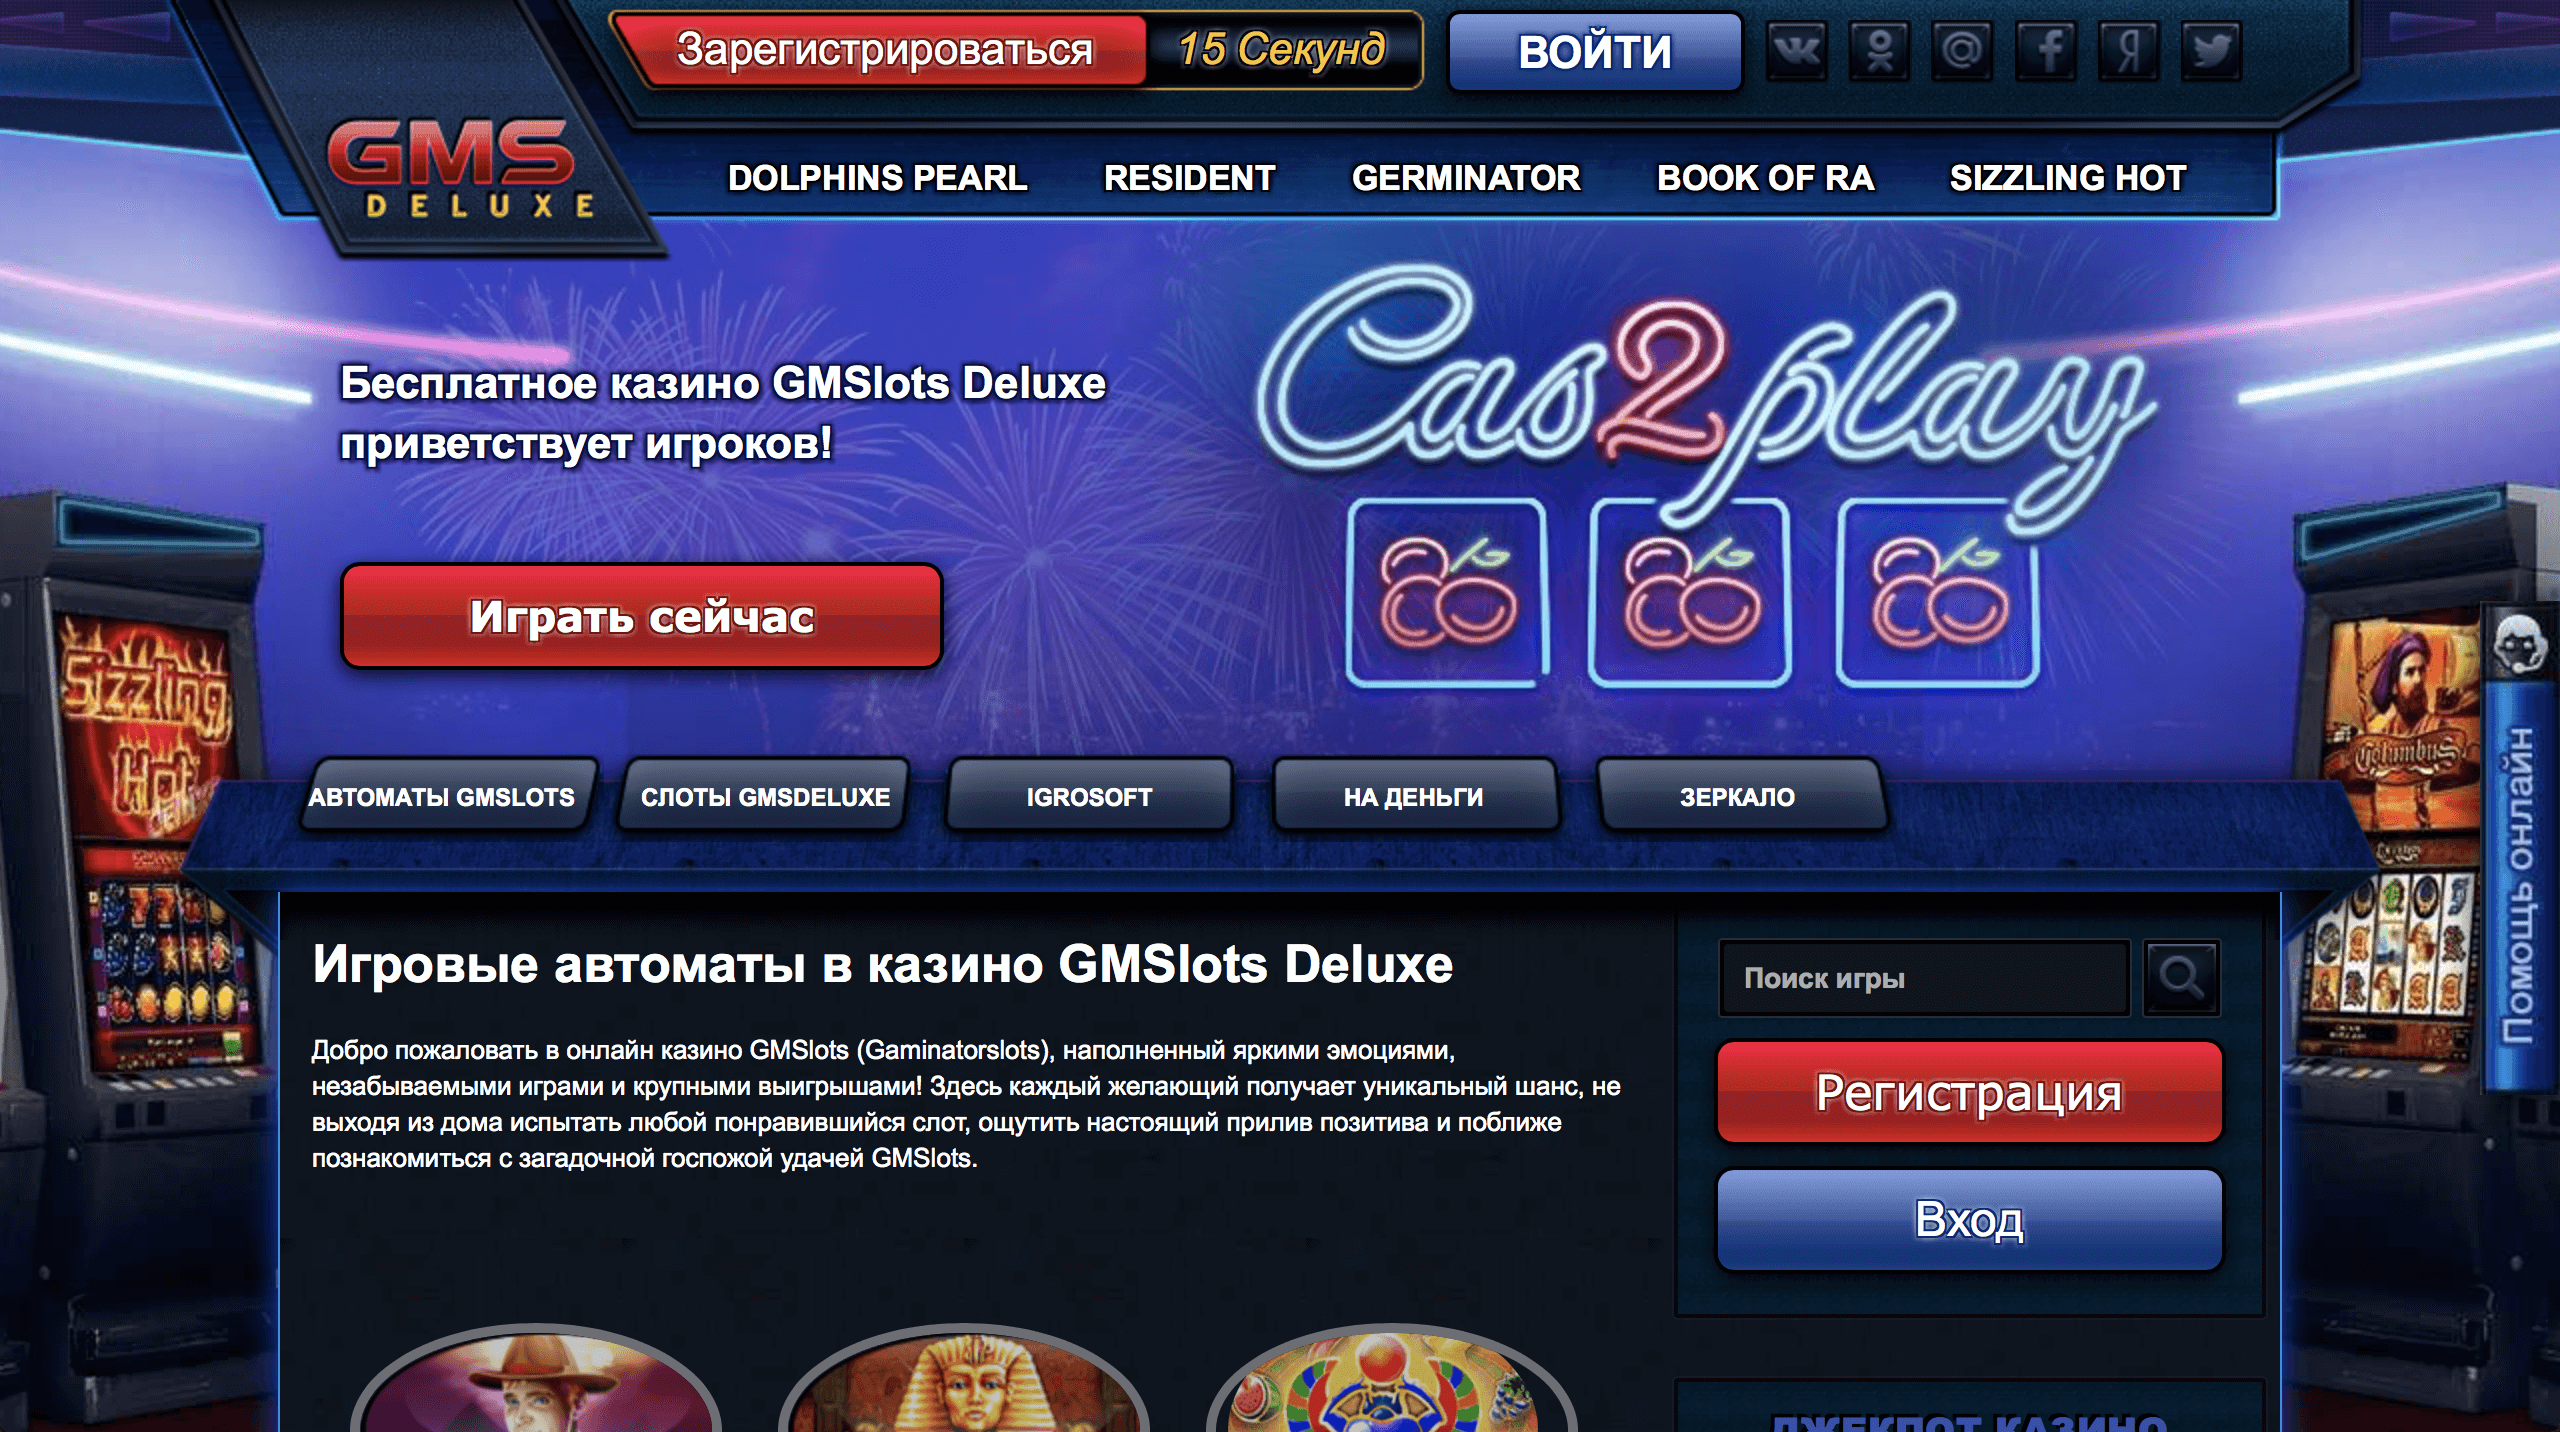 Минск вулкан казино зеркала казино адмирал онлайн casino admiral россия